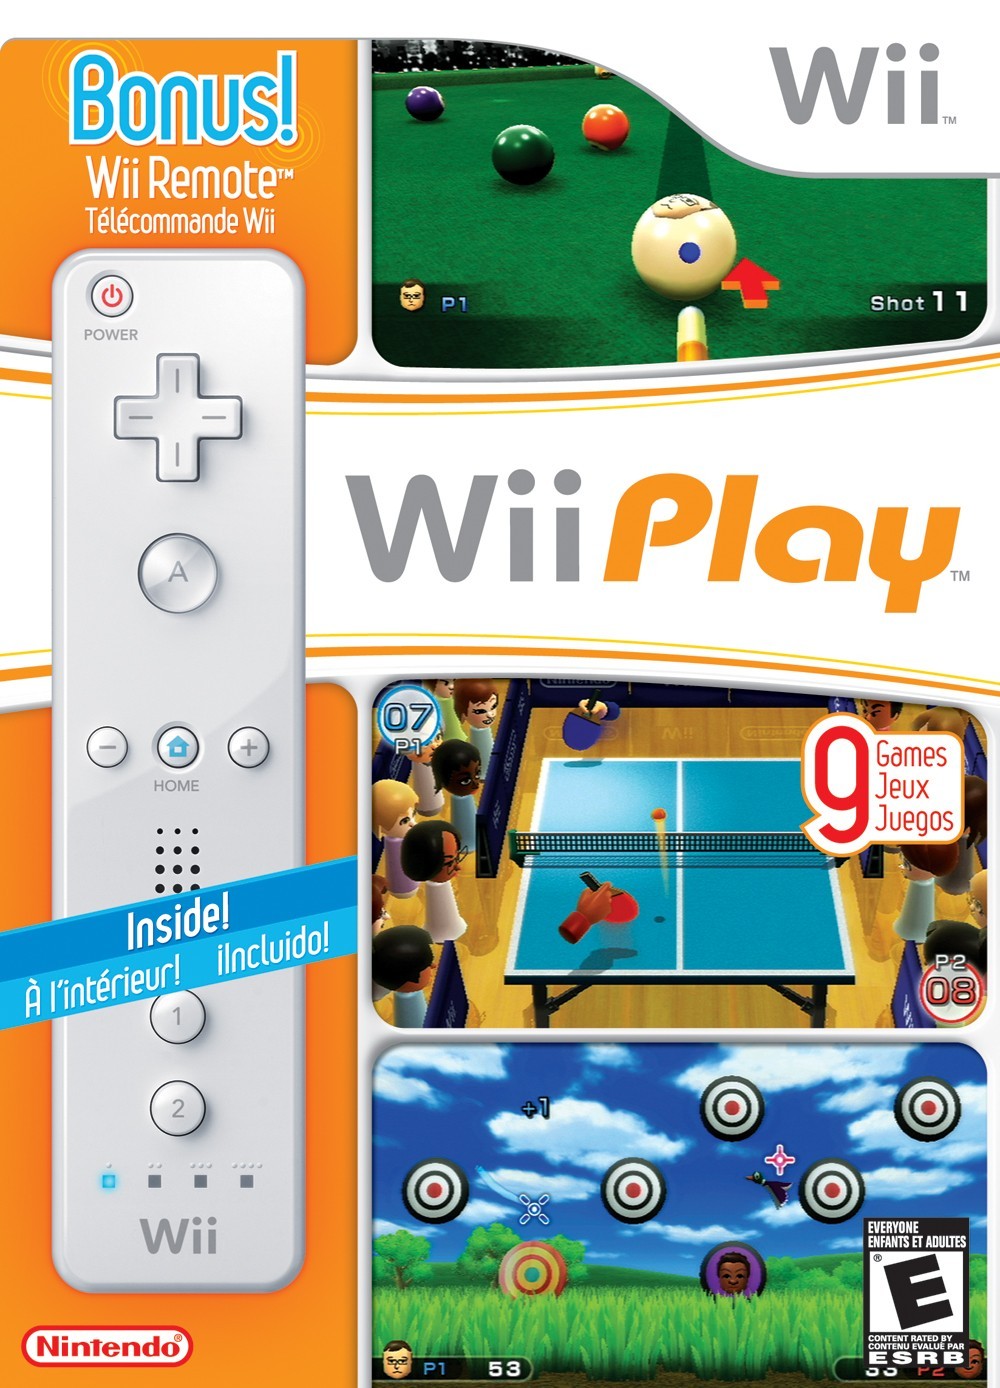 Wii Play, Nintendo